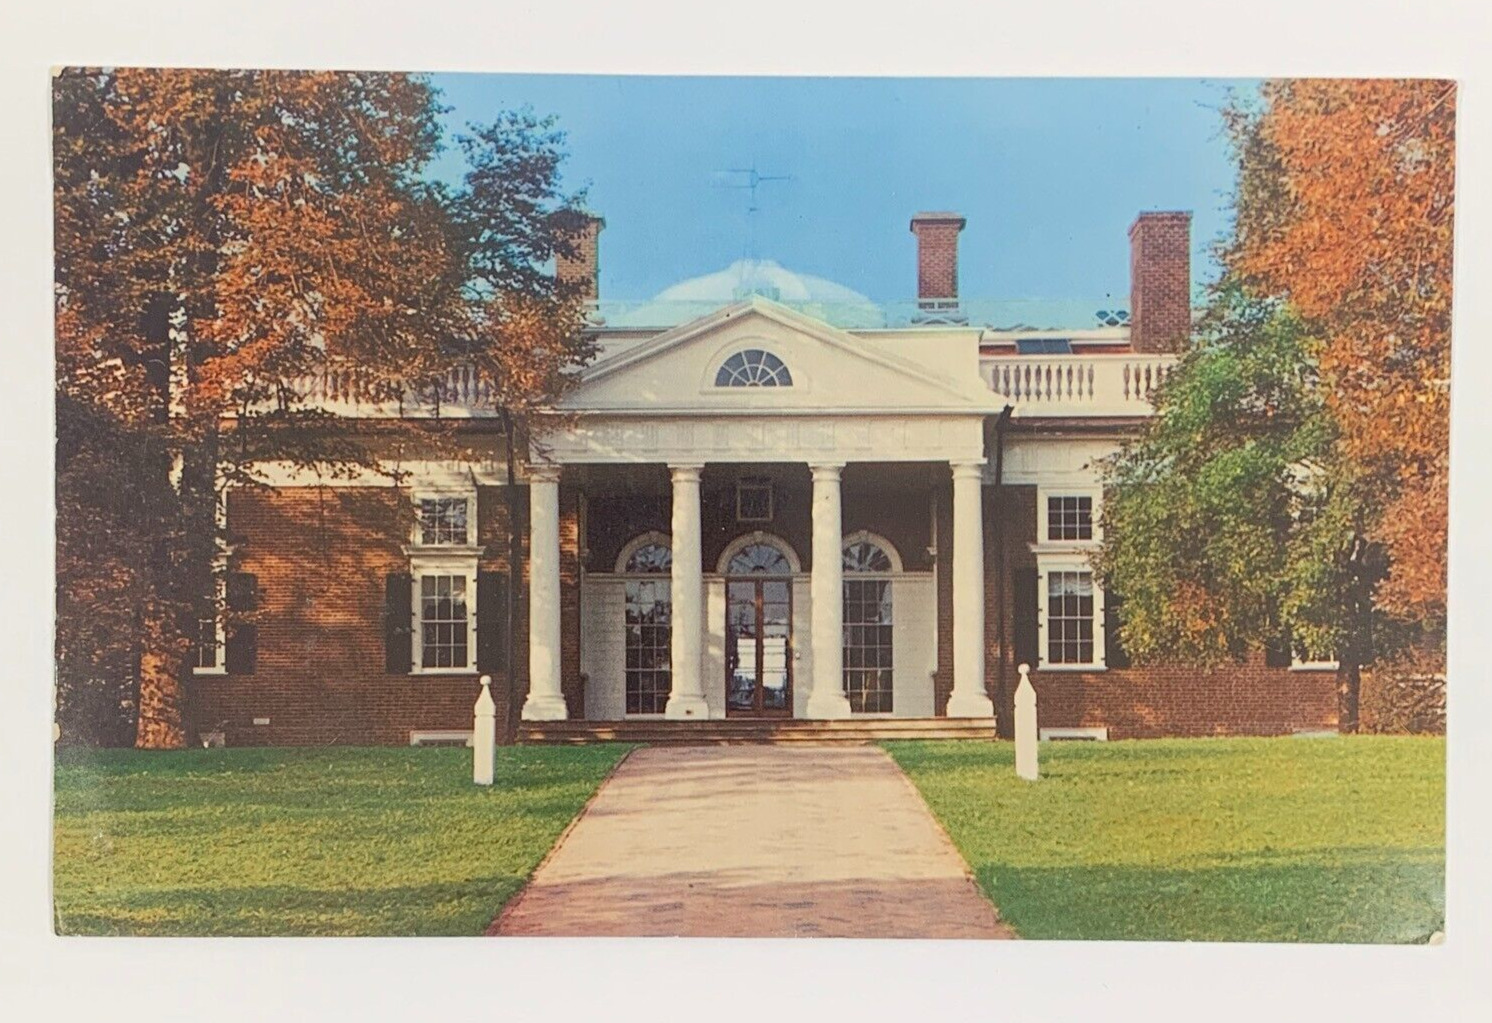 The East Front Monticello Home of Thomas Jefferson Charlottesville VA Postcard